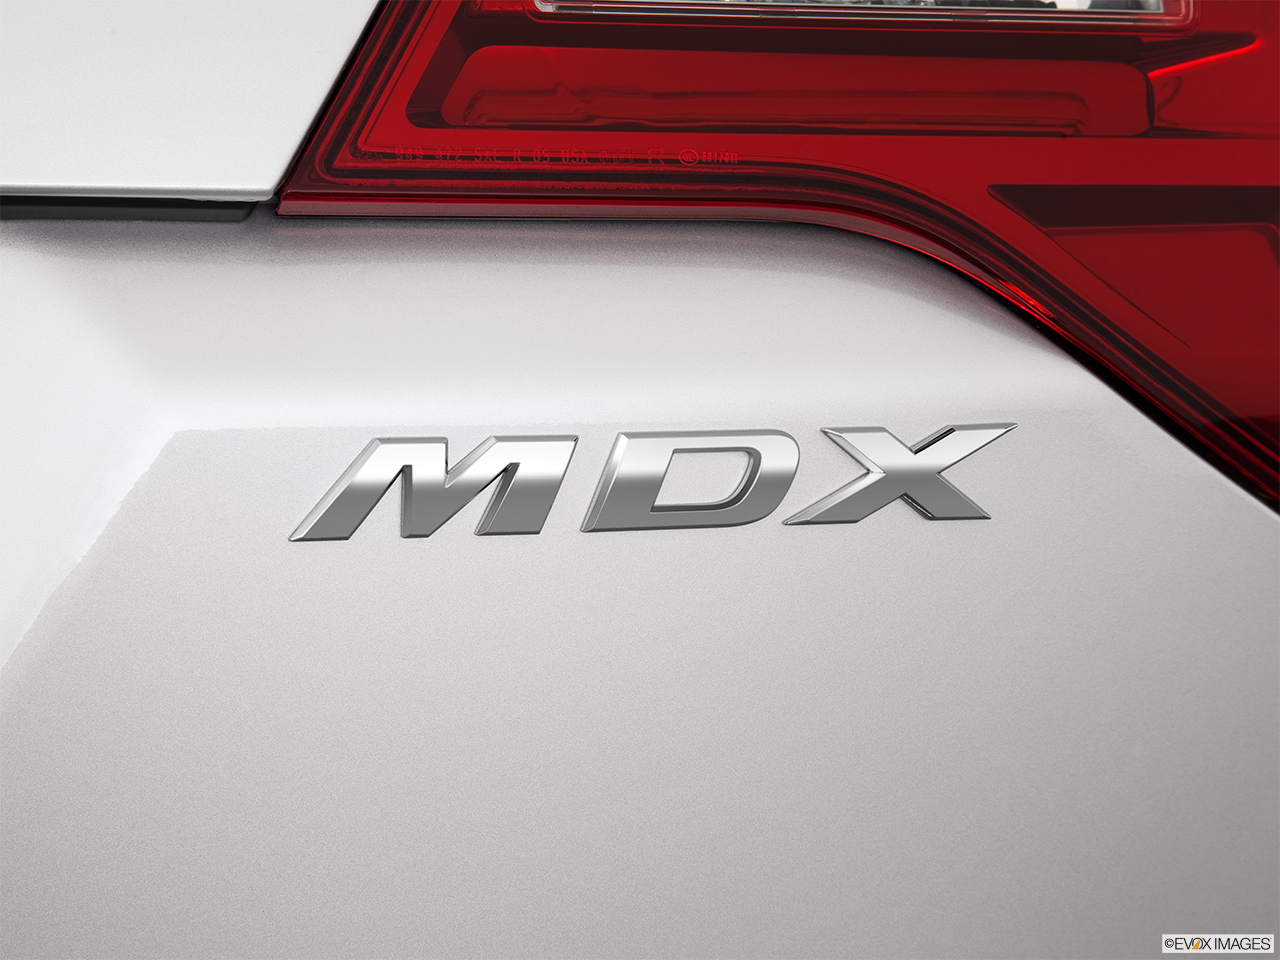 2013 Acura MDX Base Rear model badge/emblem 